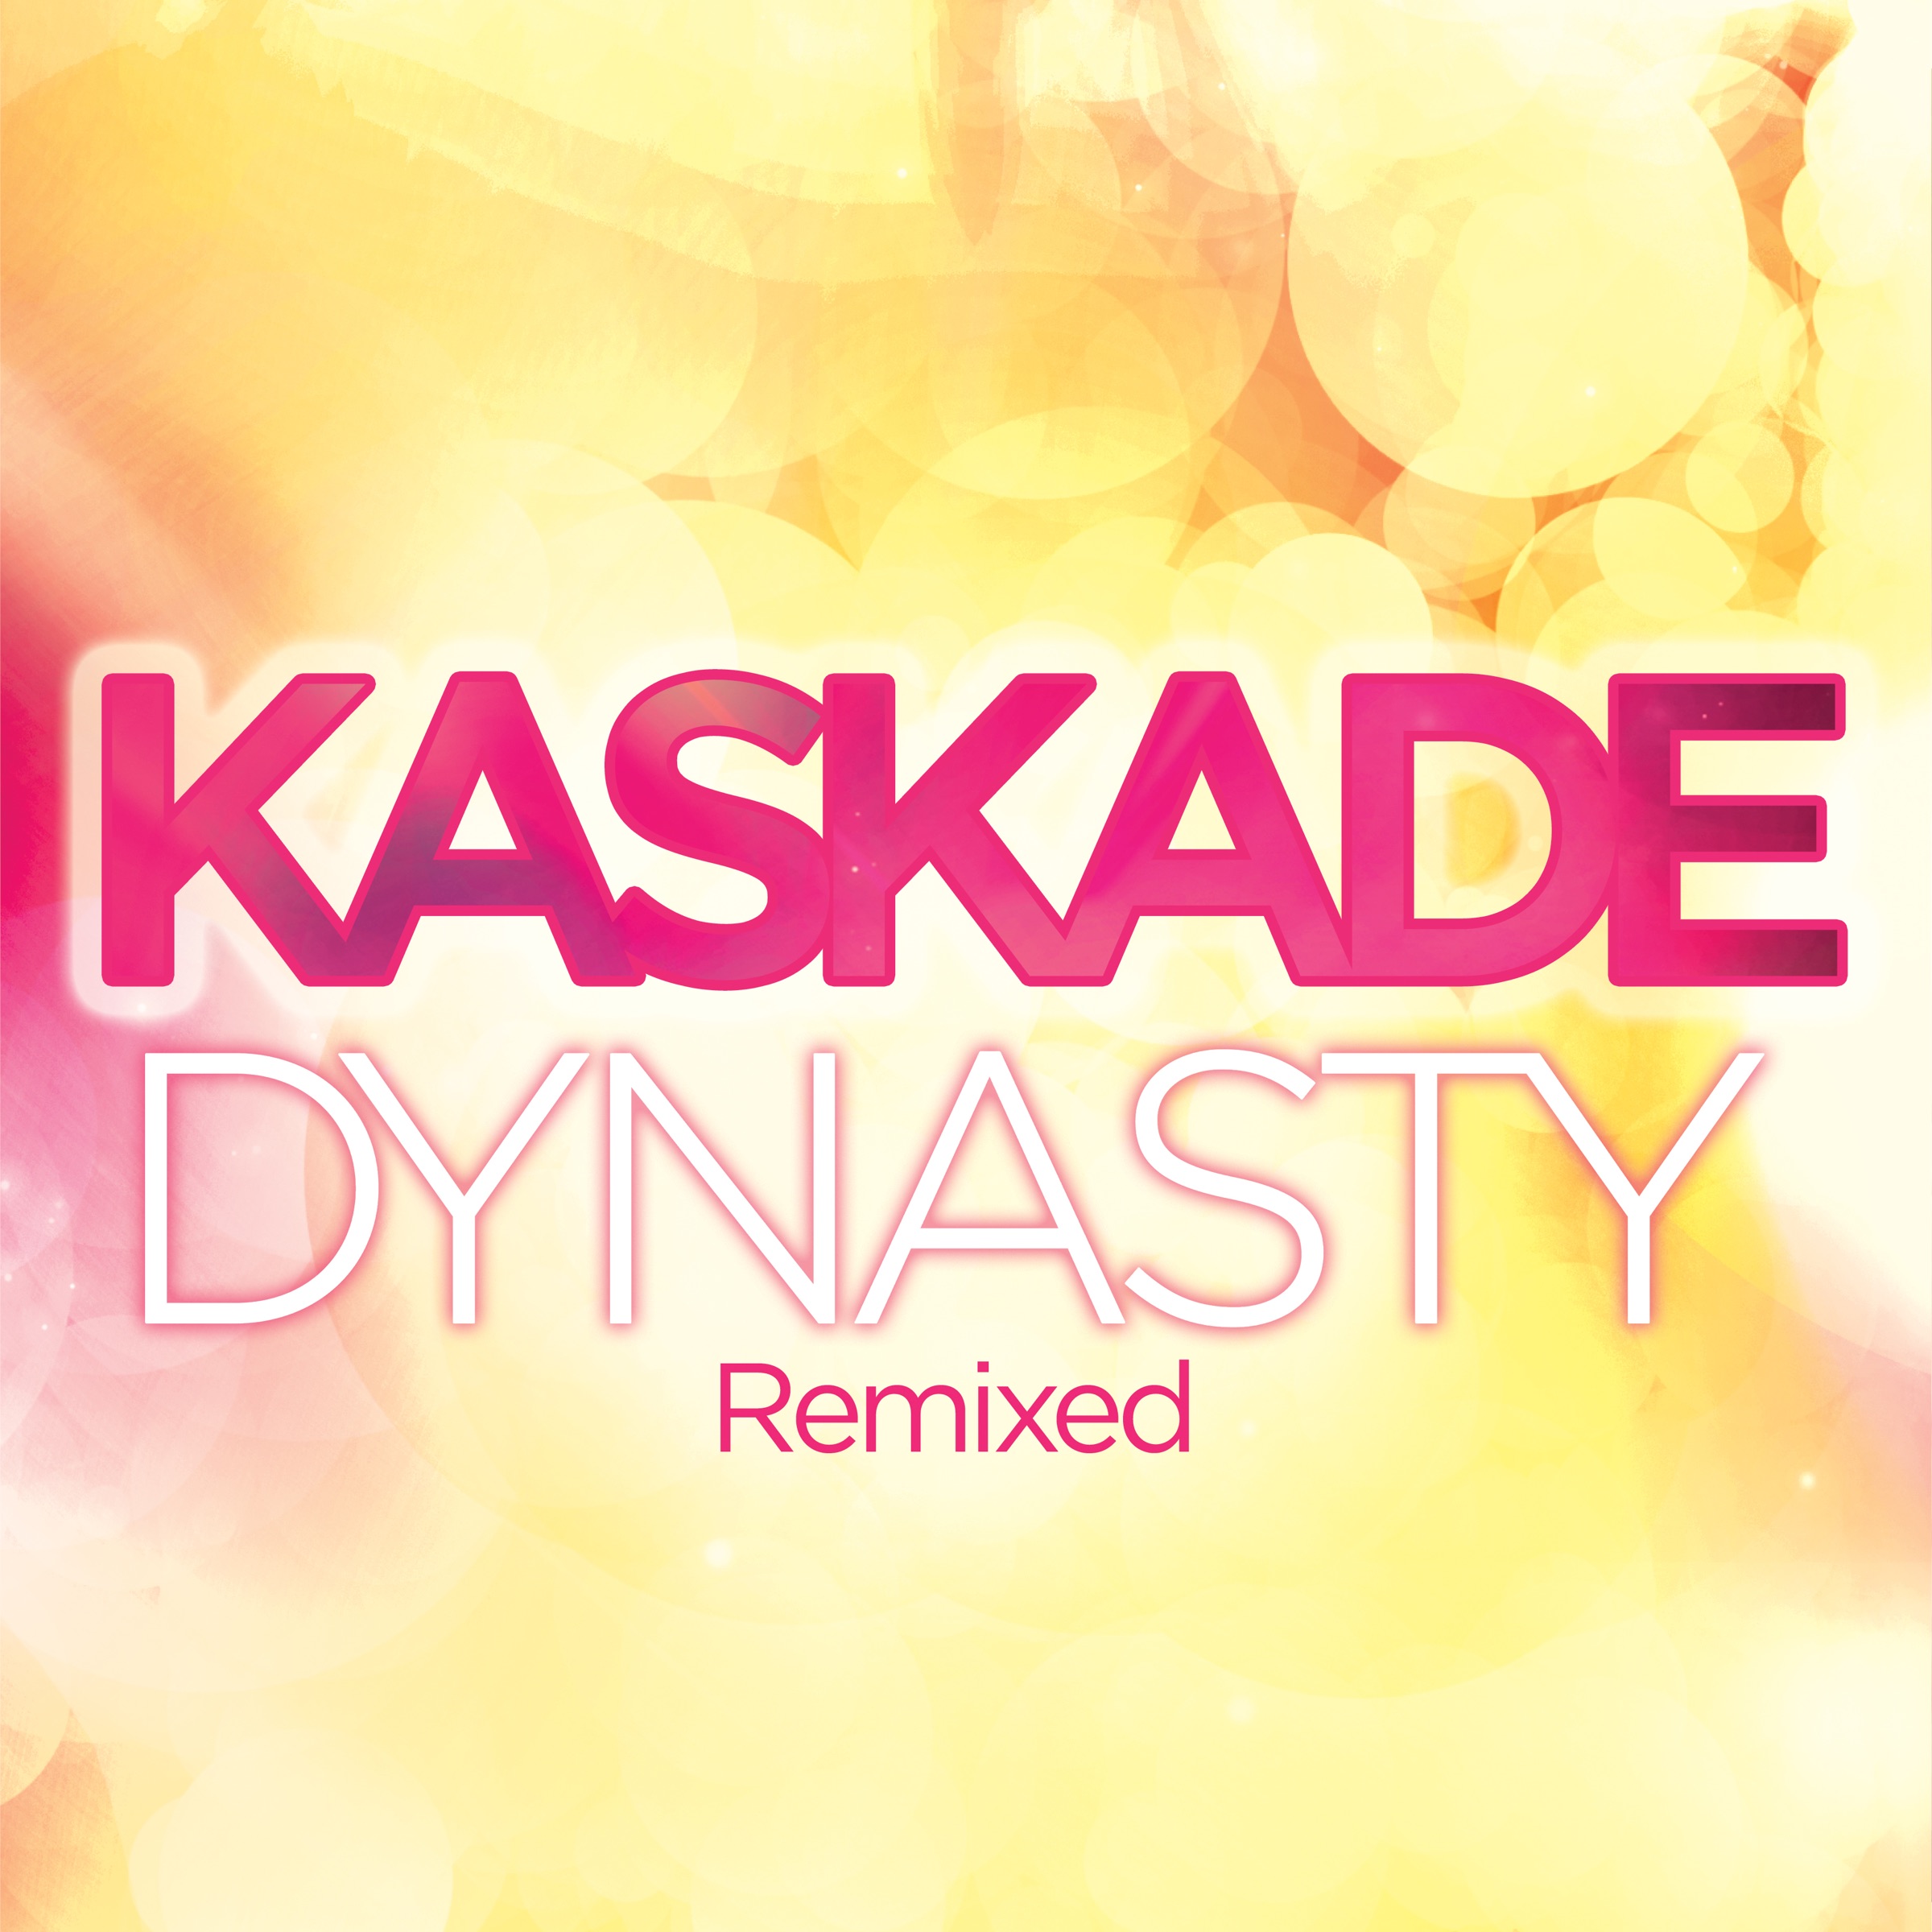 Kaskade Dynasty (Remixed) cover artwork